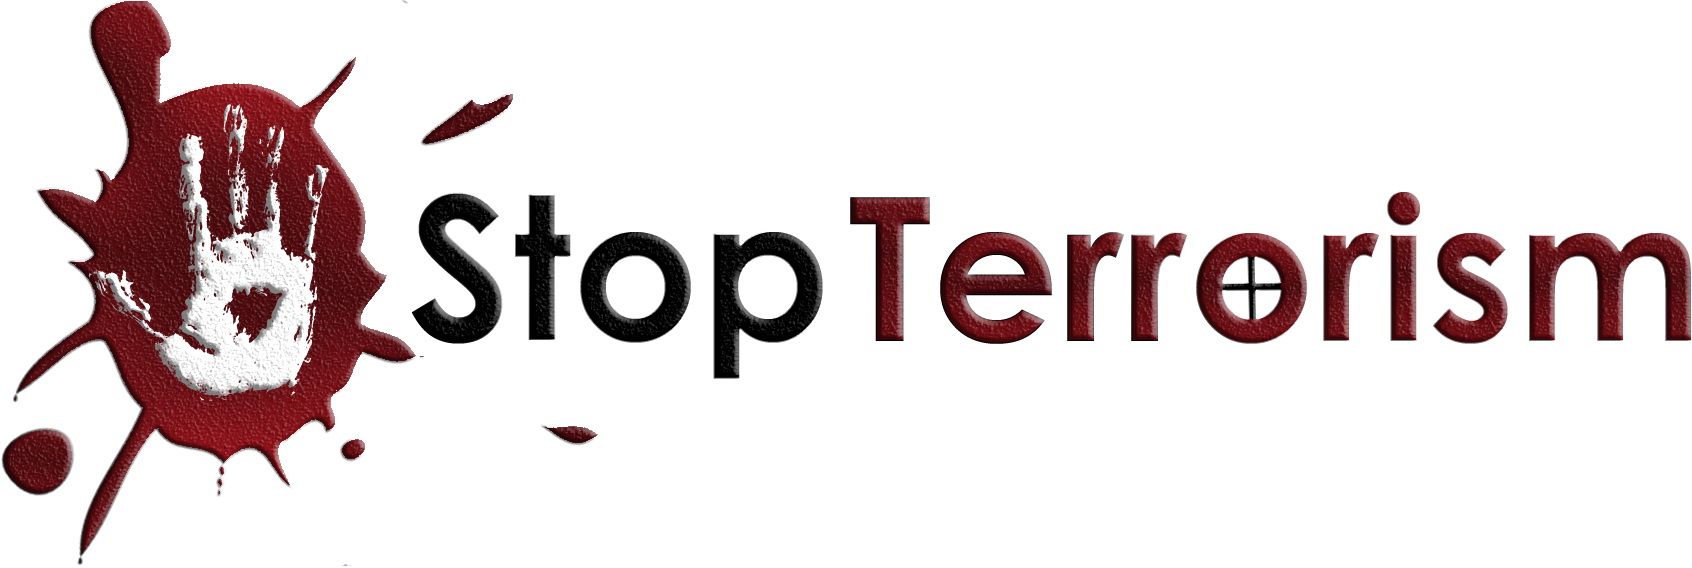 StopTerrorism1.jpg